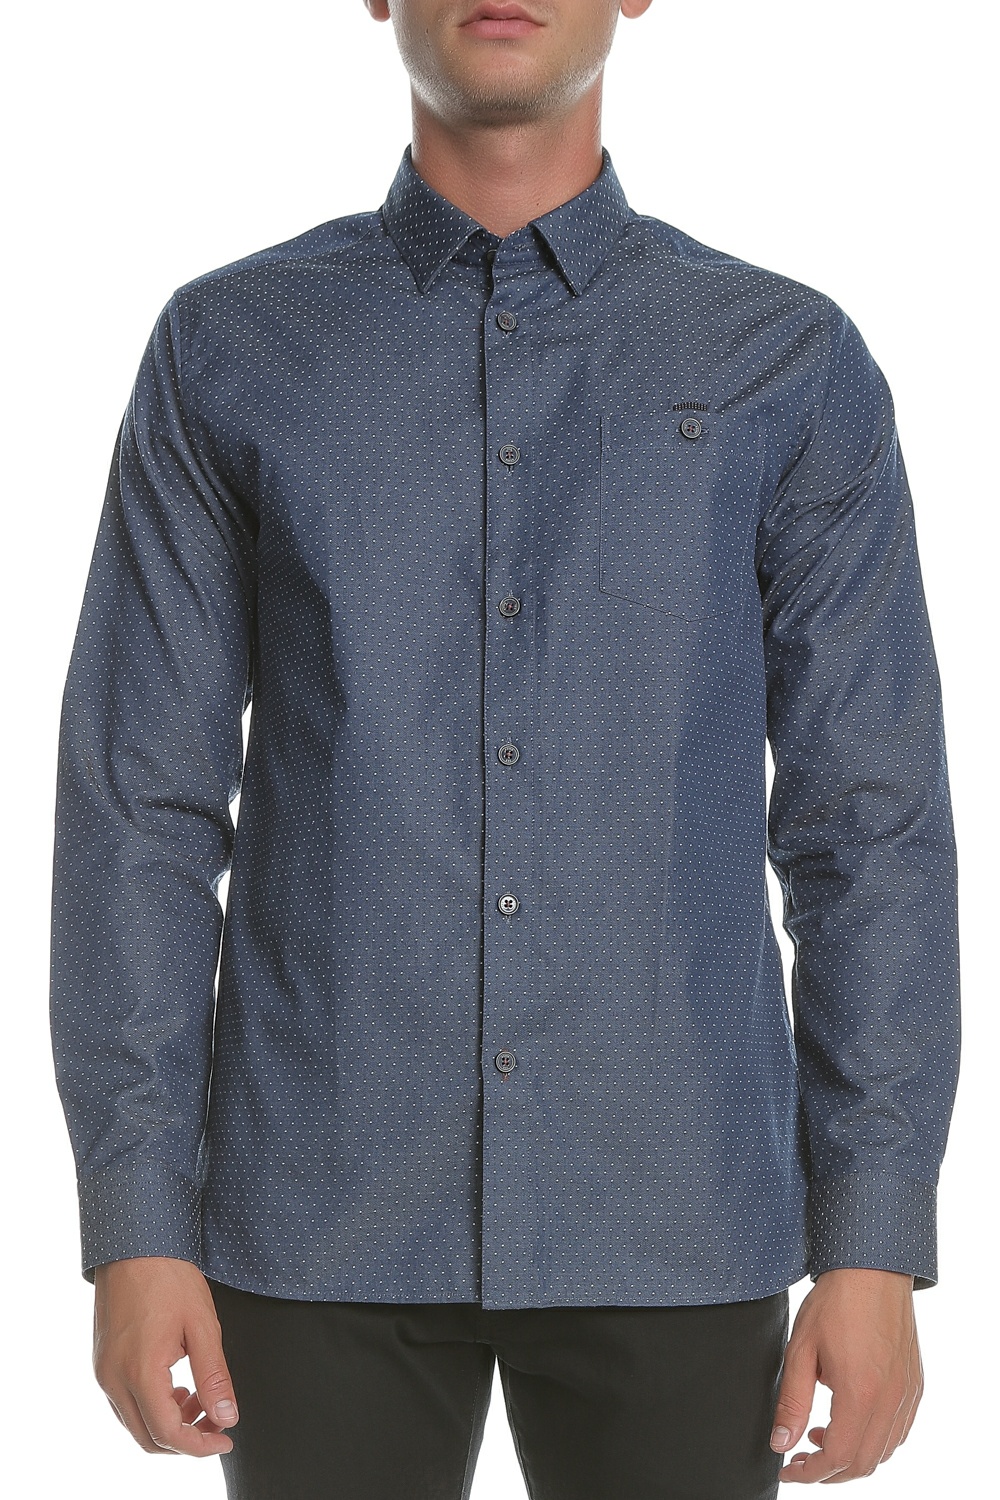 TED BAKER - Ανδρικό μακρυμάνικο πουκάμισο BIRKSEY LS DIAMOND DOBBY μπλε με μοτίβο Ανδρικά/Ρούχα/Πουκάμισα/Μακρυμάνικα